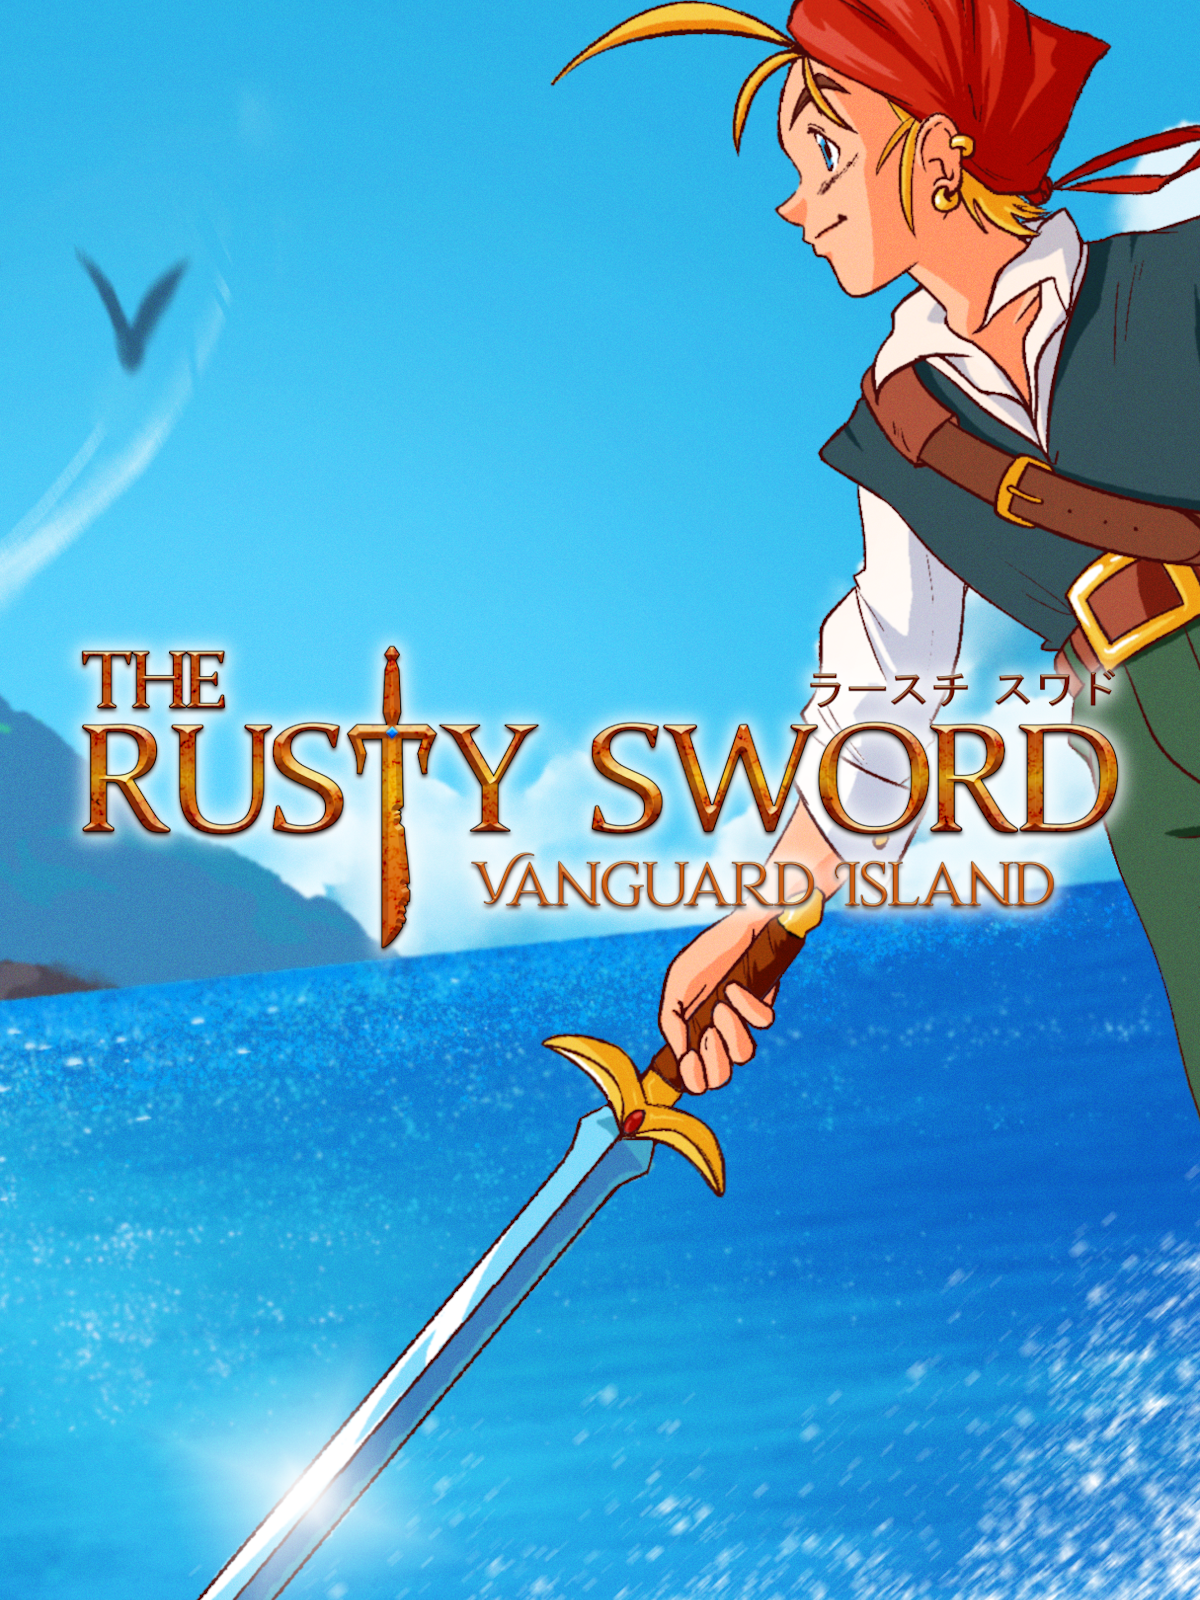 The Rusty Sword: Vanguard Island Free